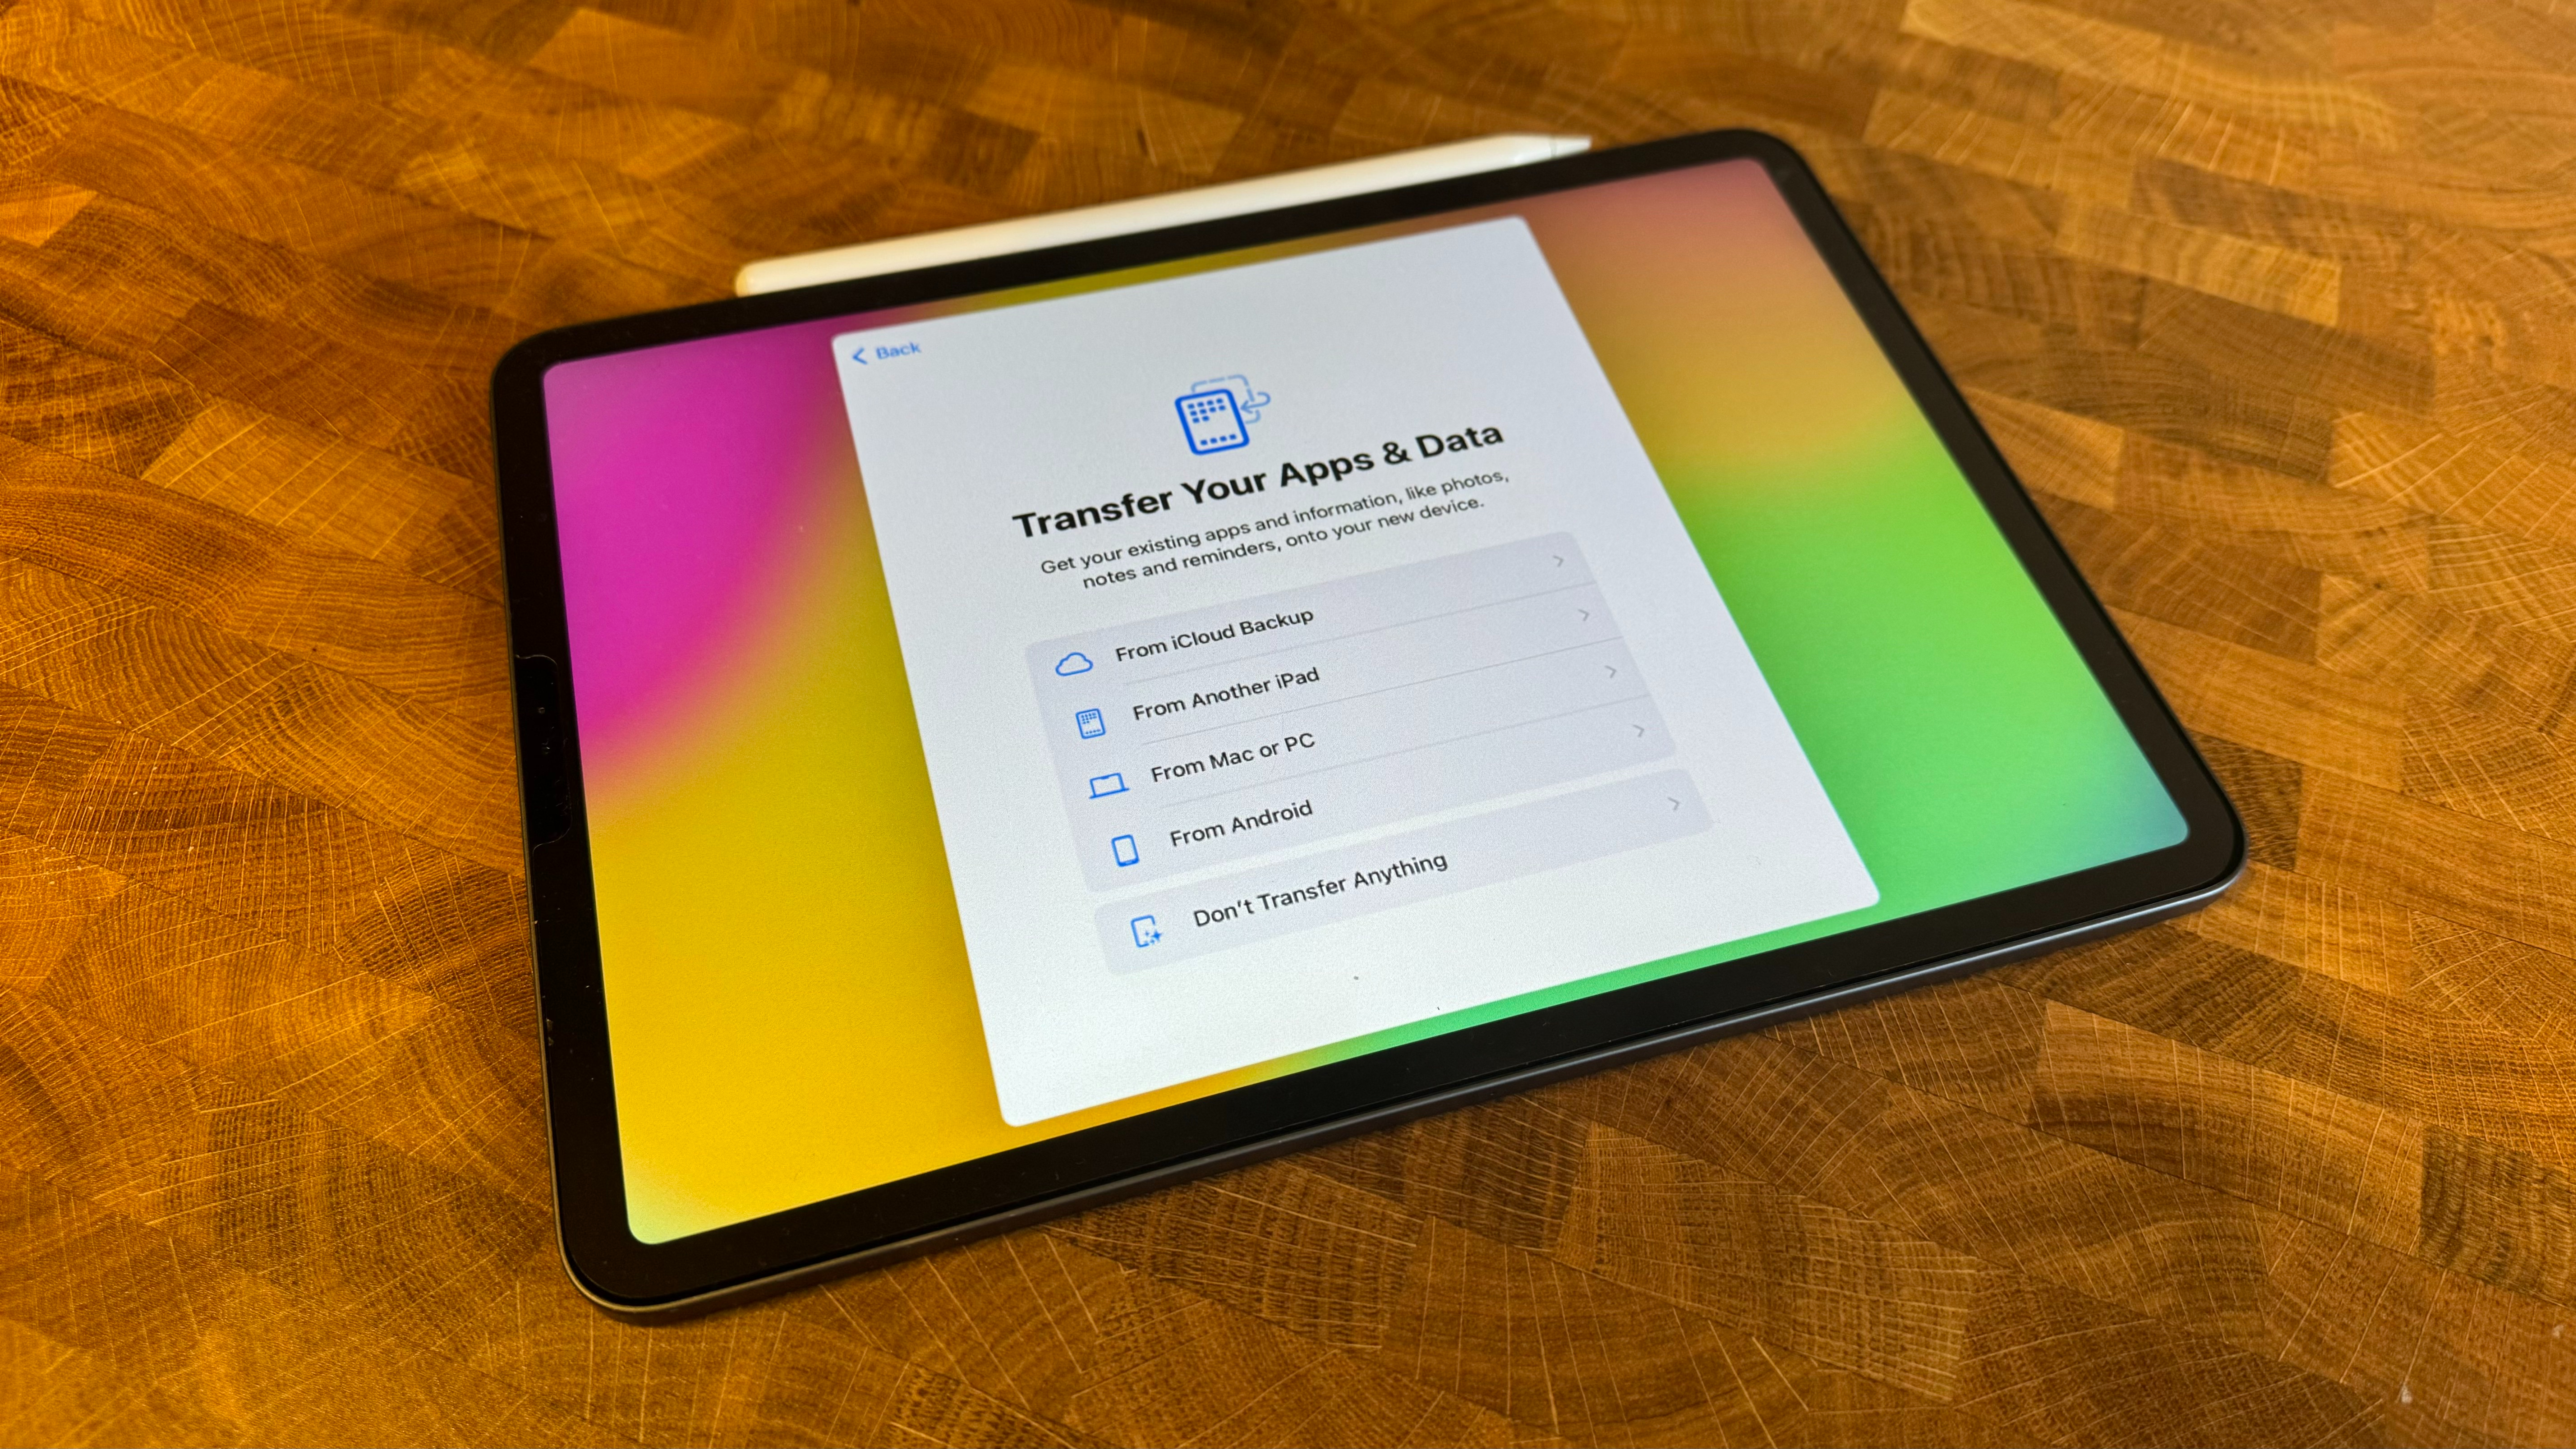 How to transfer data from iPad to iPad